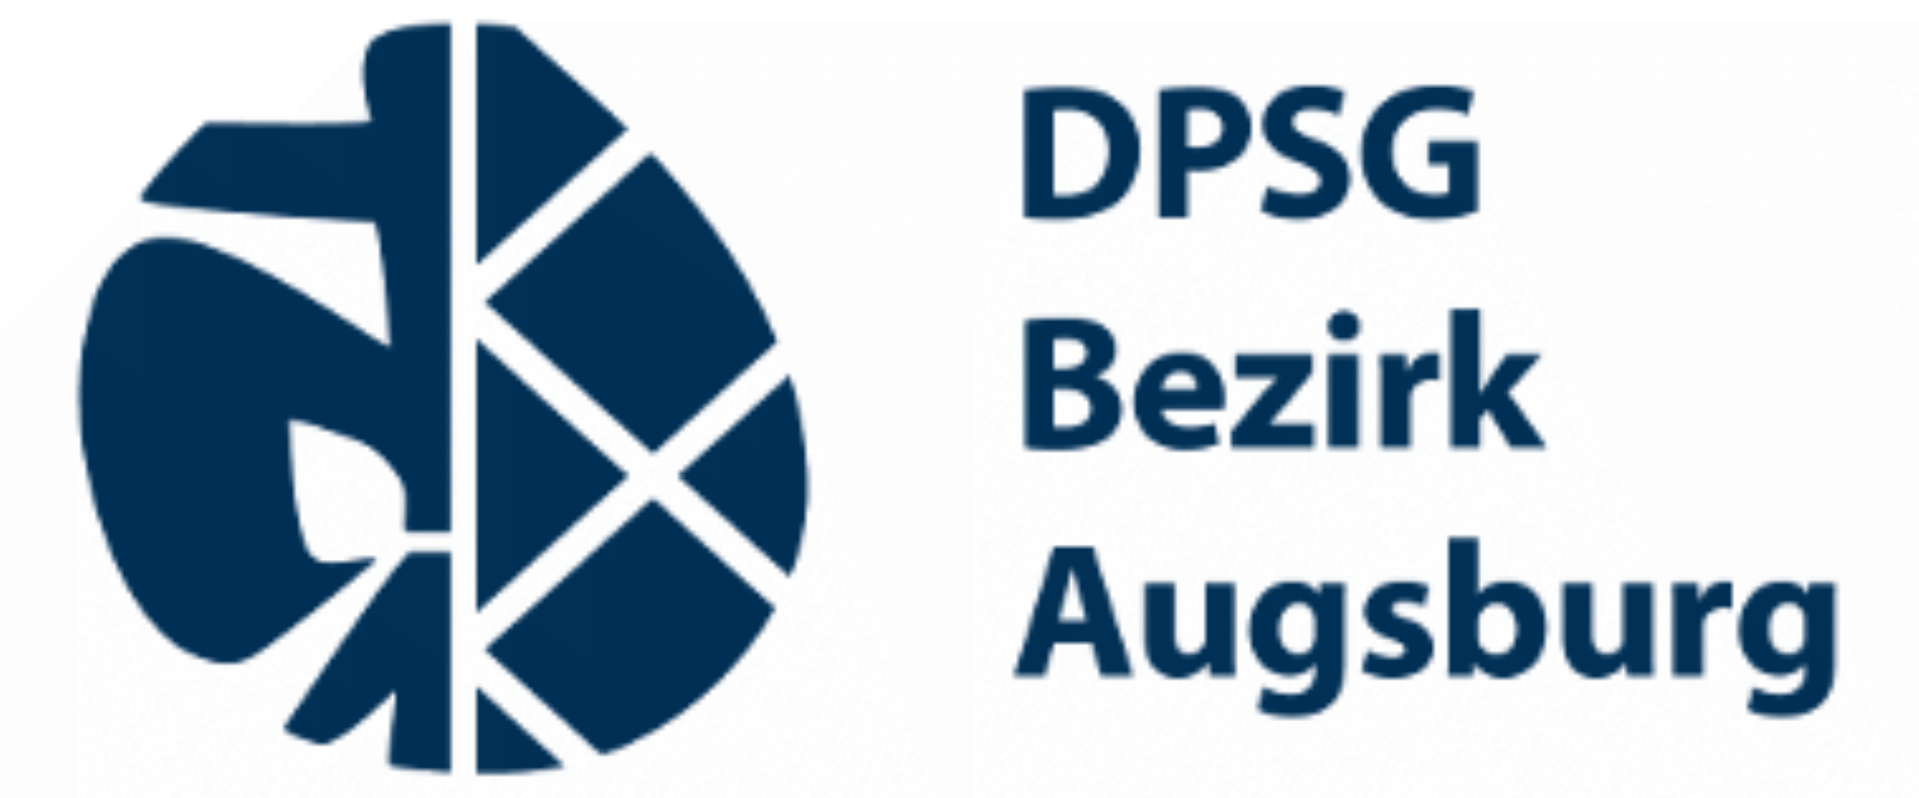 DPSG Bezirk Augsburg